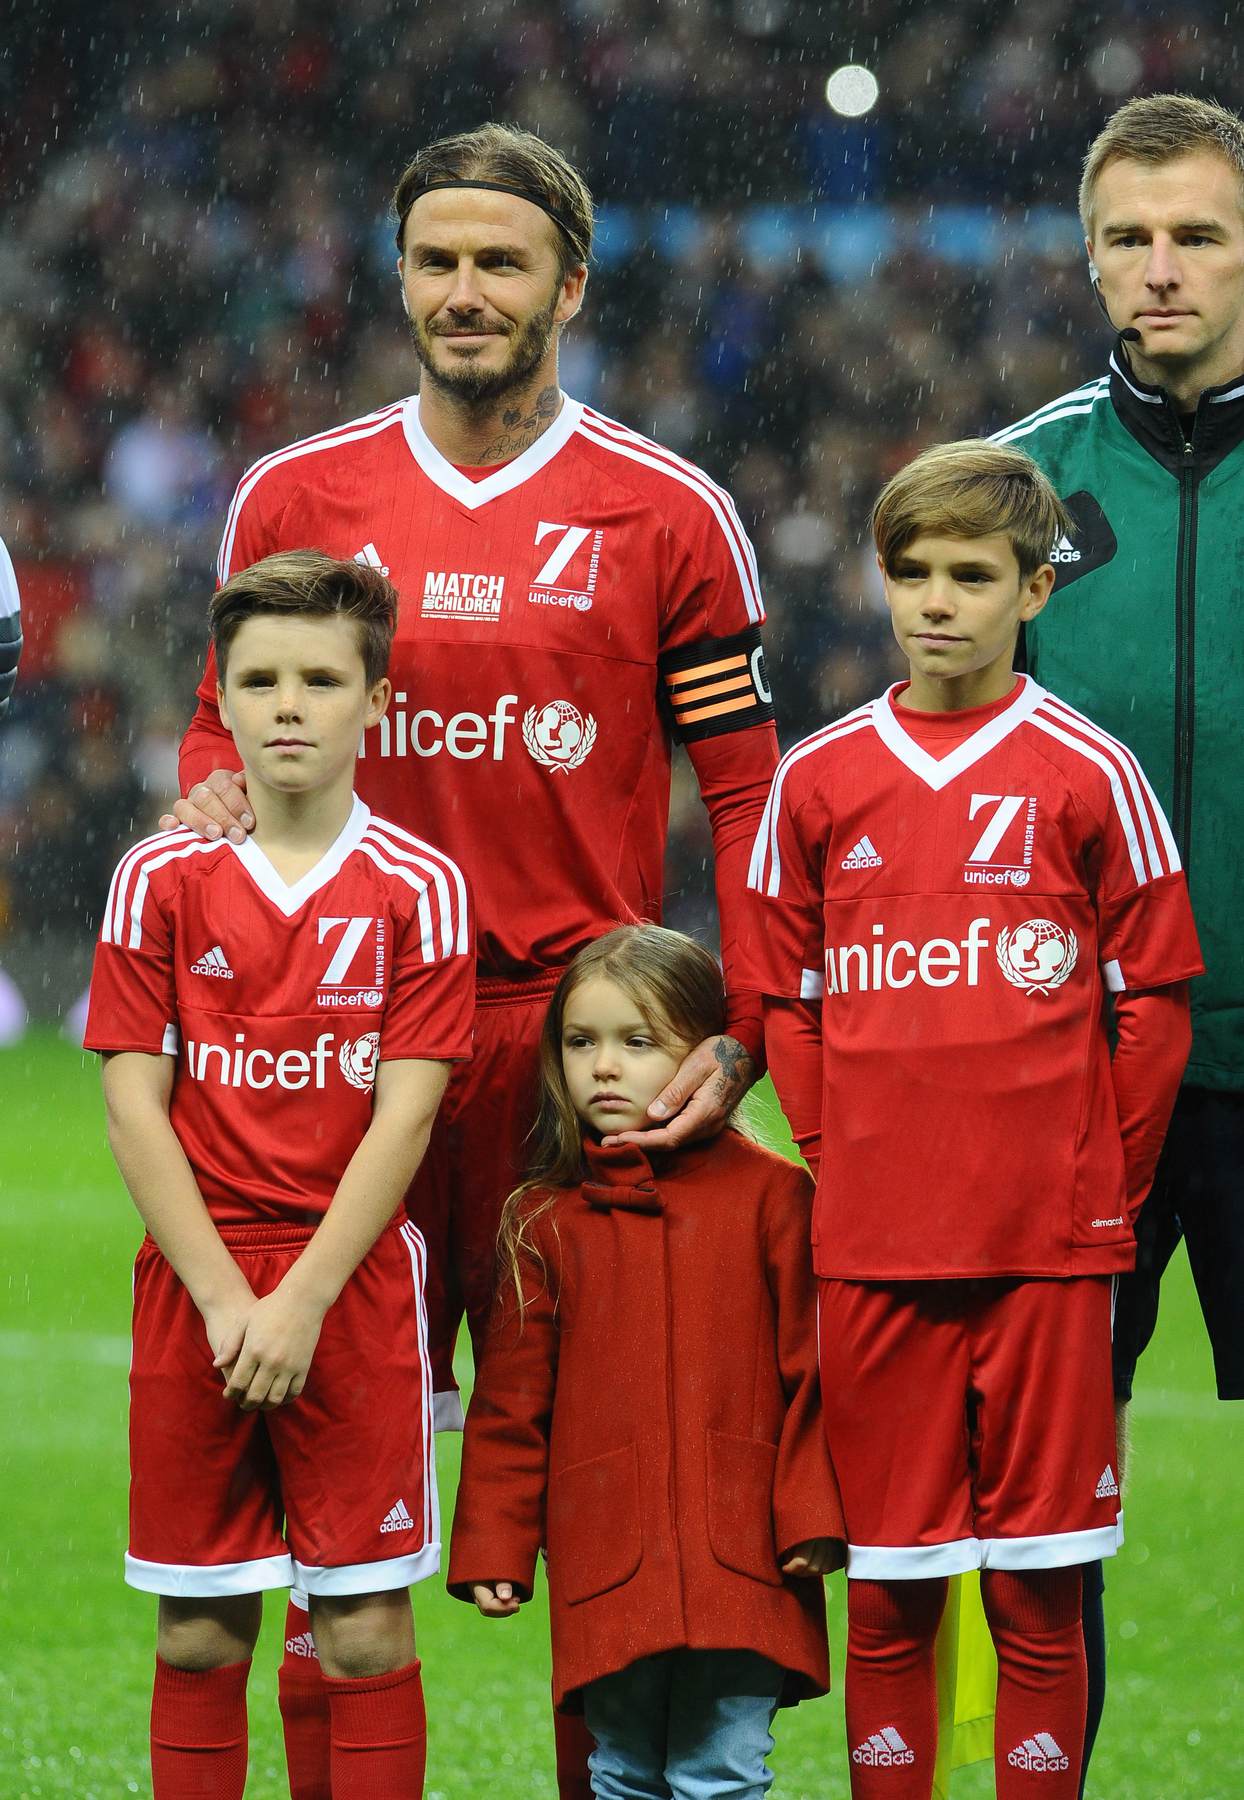 David Beckham Bring His Children to Match for Children Football Match!